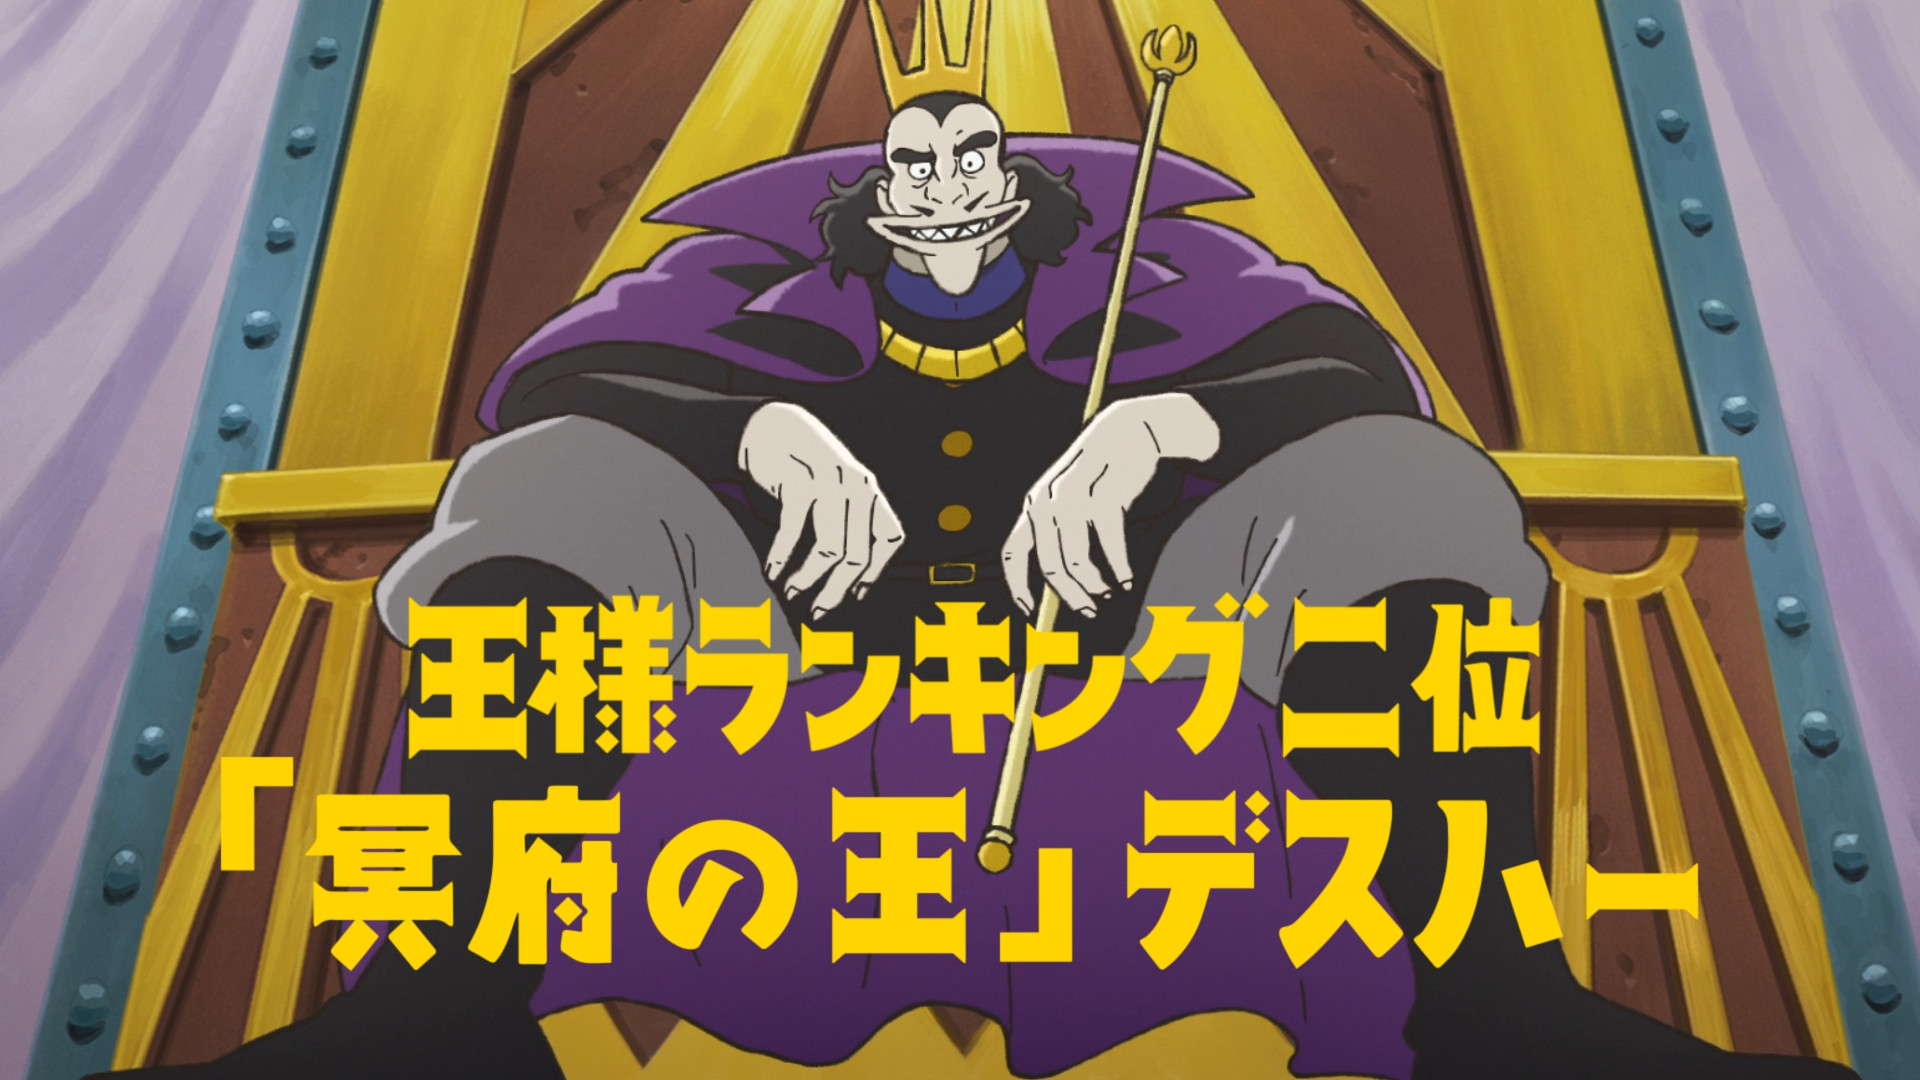 Episode 10 - Ranking of Kings [2021-12-20] - Anime News Network